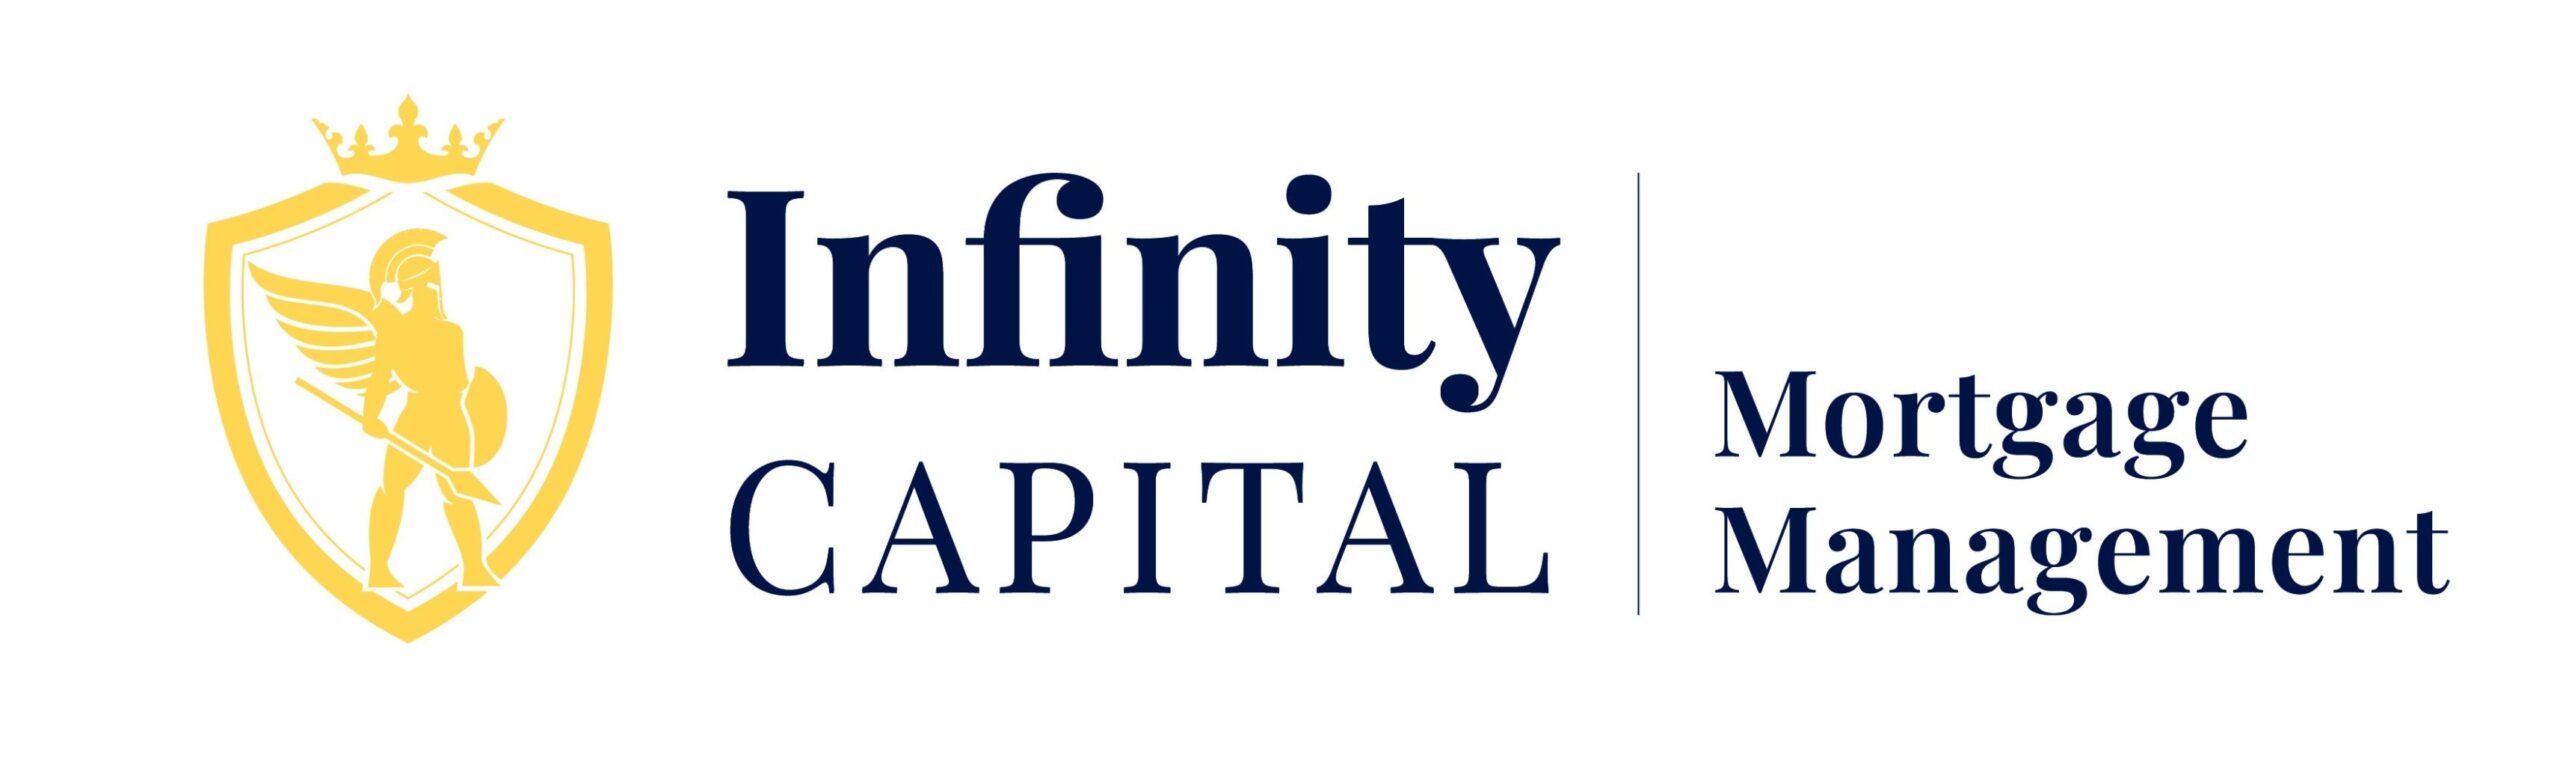 Infinity Capital Group